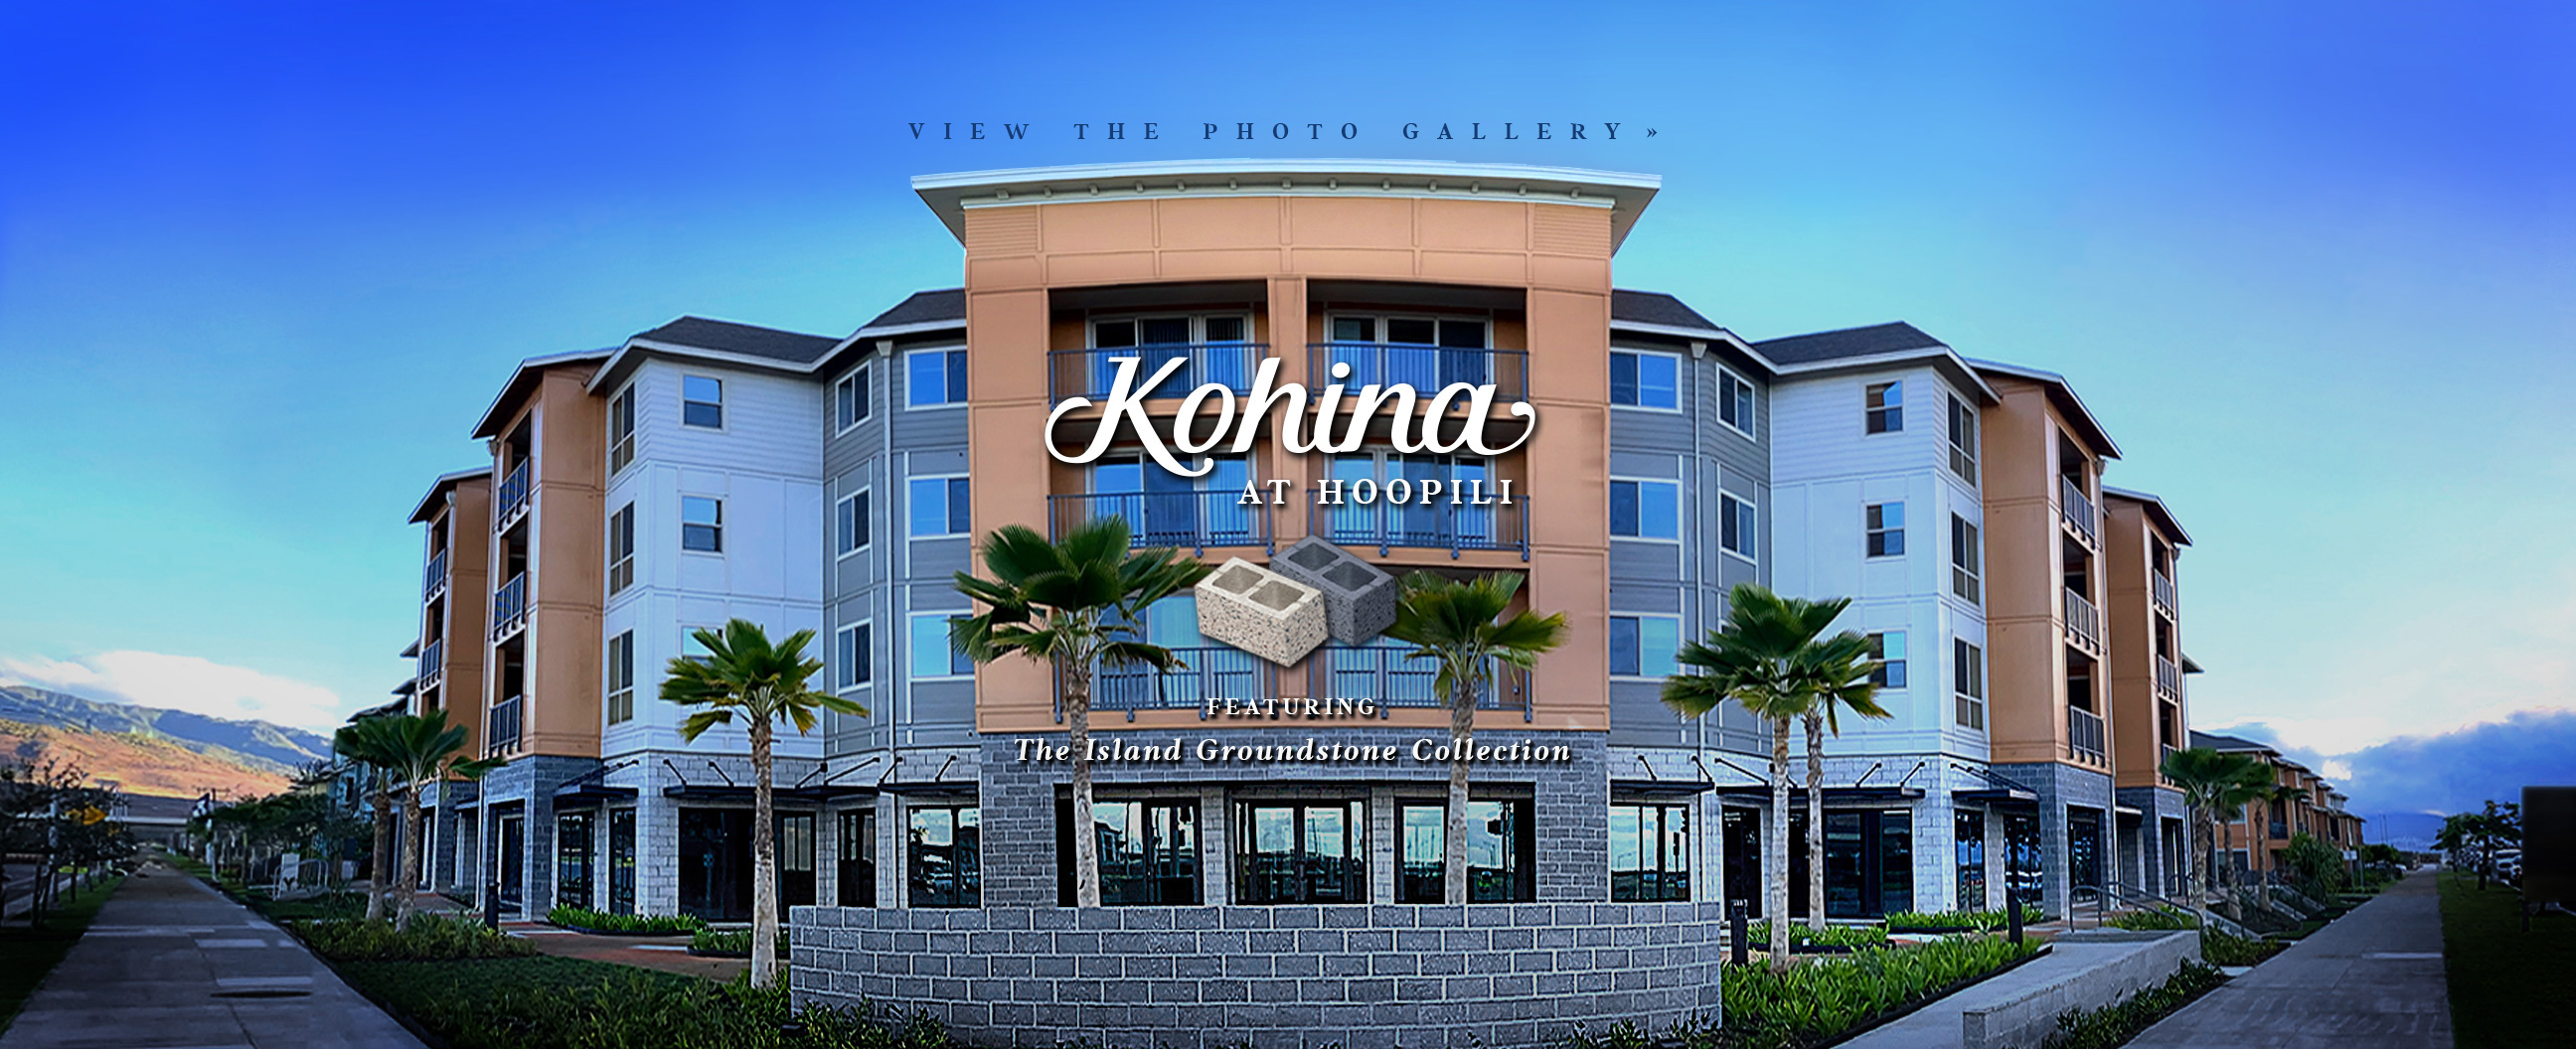 Kohina at Hoopili buildings